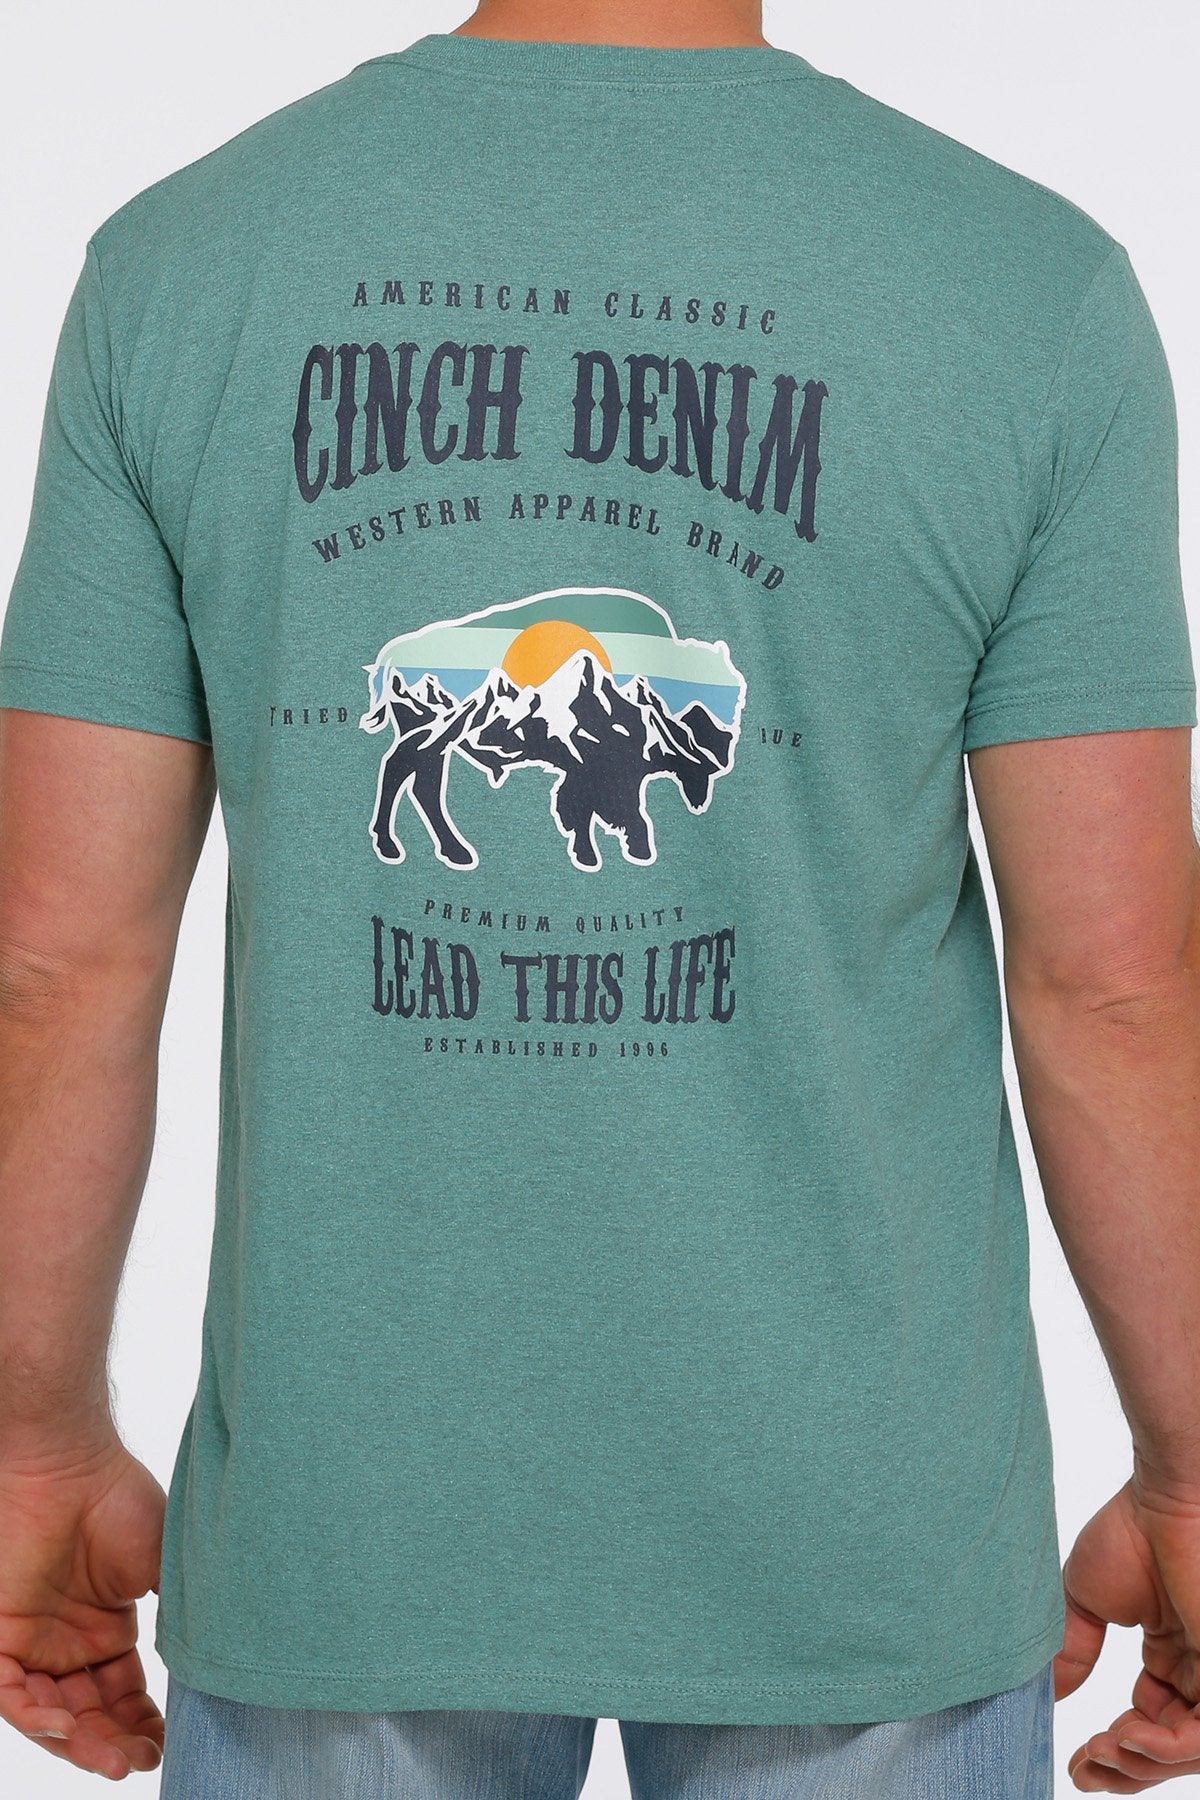 Mens Cinch Lead This Life Bison Tee Tshirt - Emerald (6852747657293)